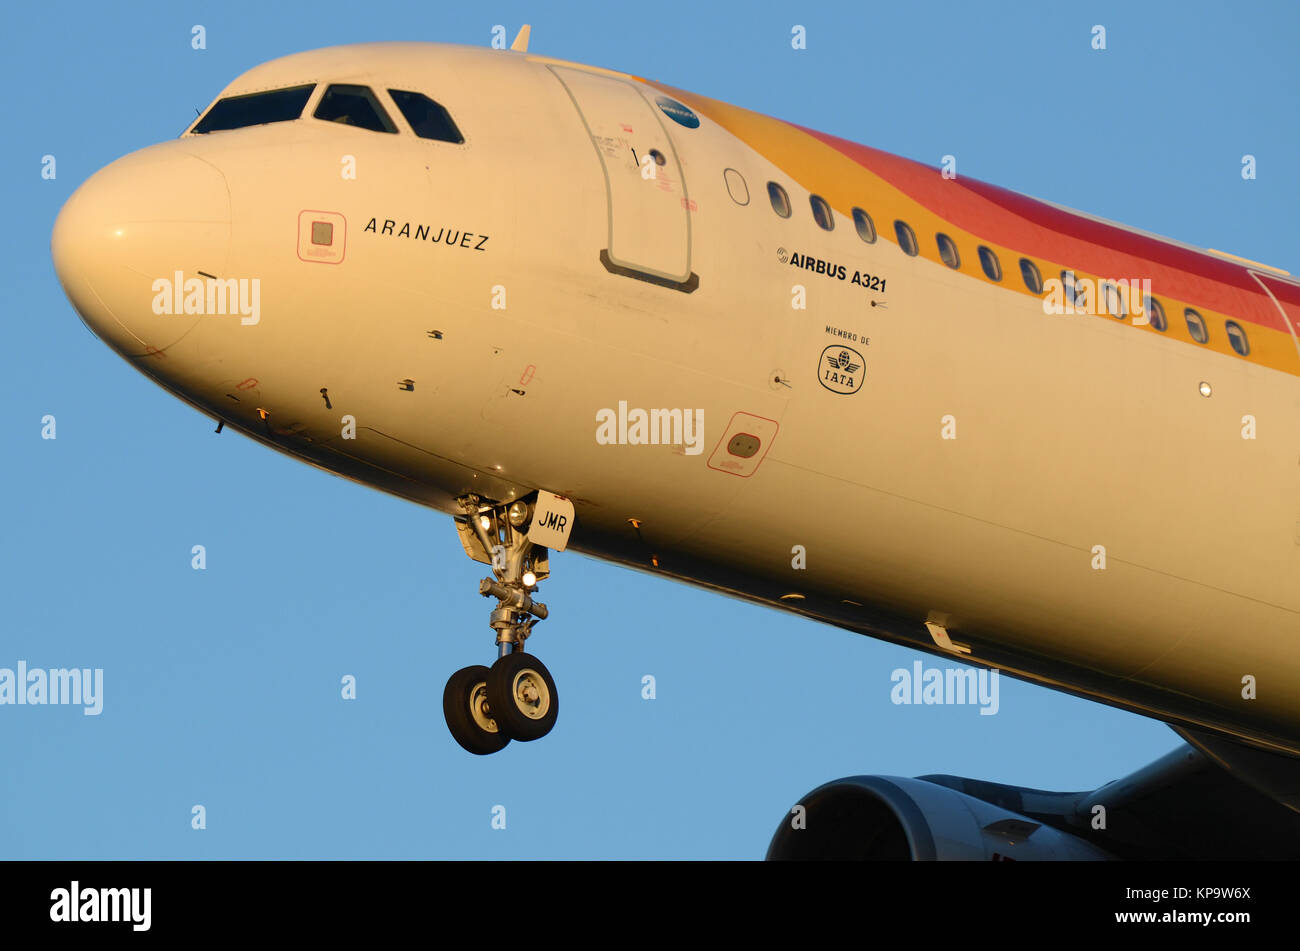 Iberia Airbus A321 -200 jet plane registration EC-JMR named Aranjuez landing at London Heathrow Airport, UK Stock Photo